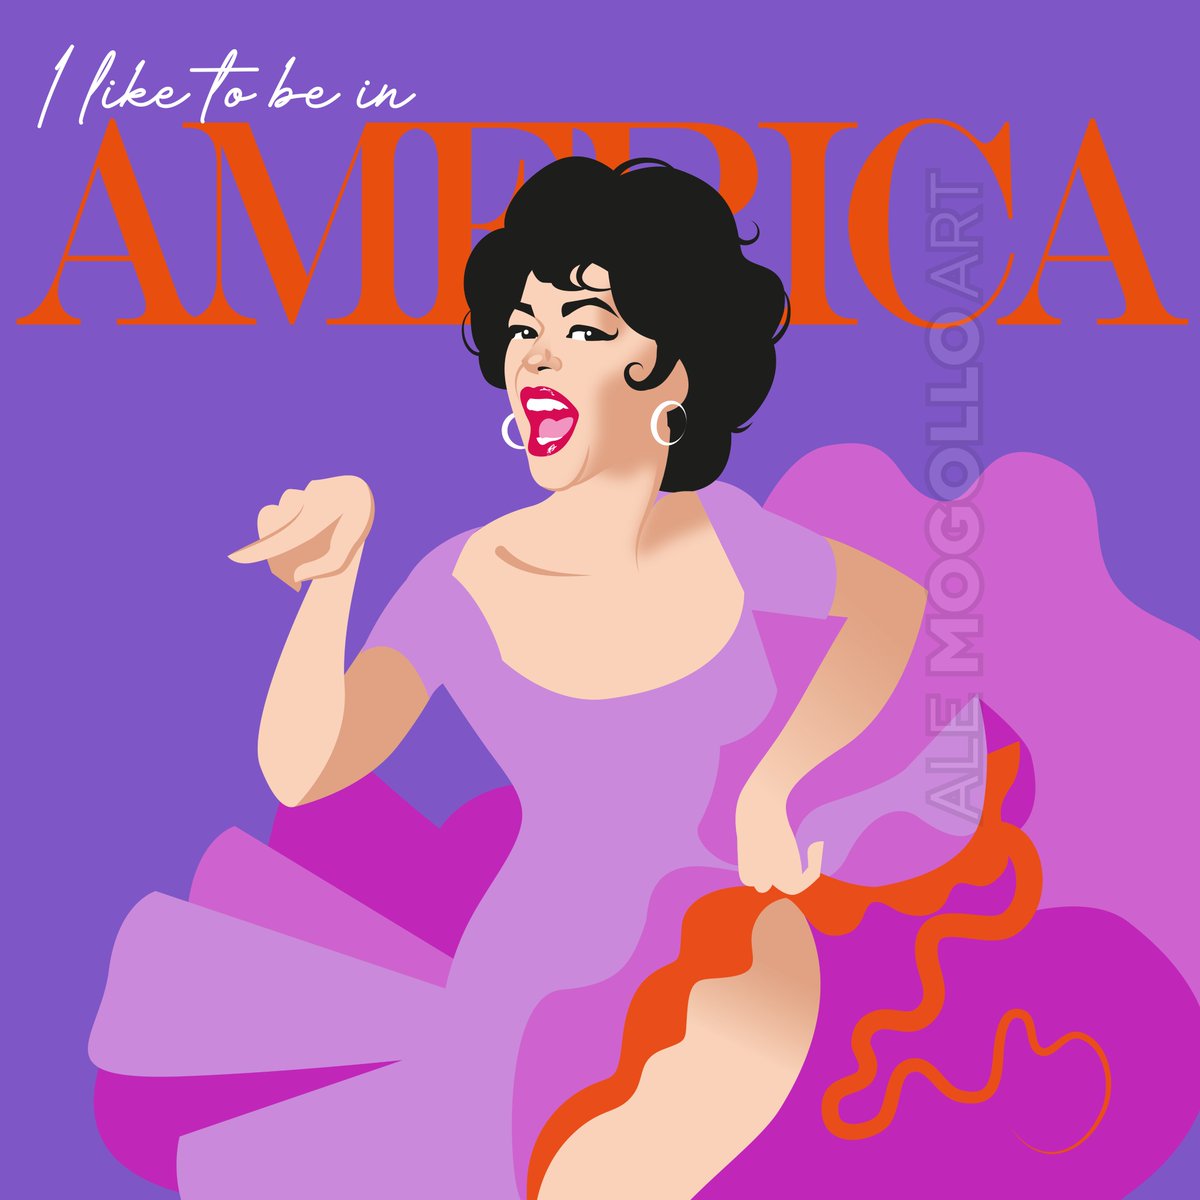 Happy 92 birthday to living legend, academy award winner Rita Moreno, unforgettable as Anita in the original West Side Story.
#ritamoreno #anita #puertorico #america #westsidestory #alejandromogolloart